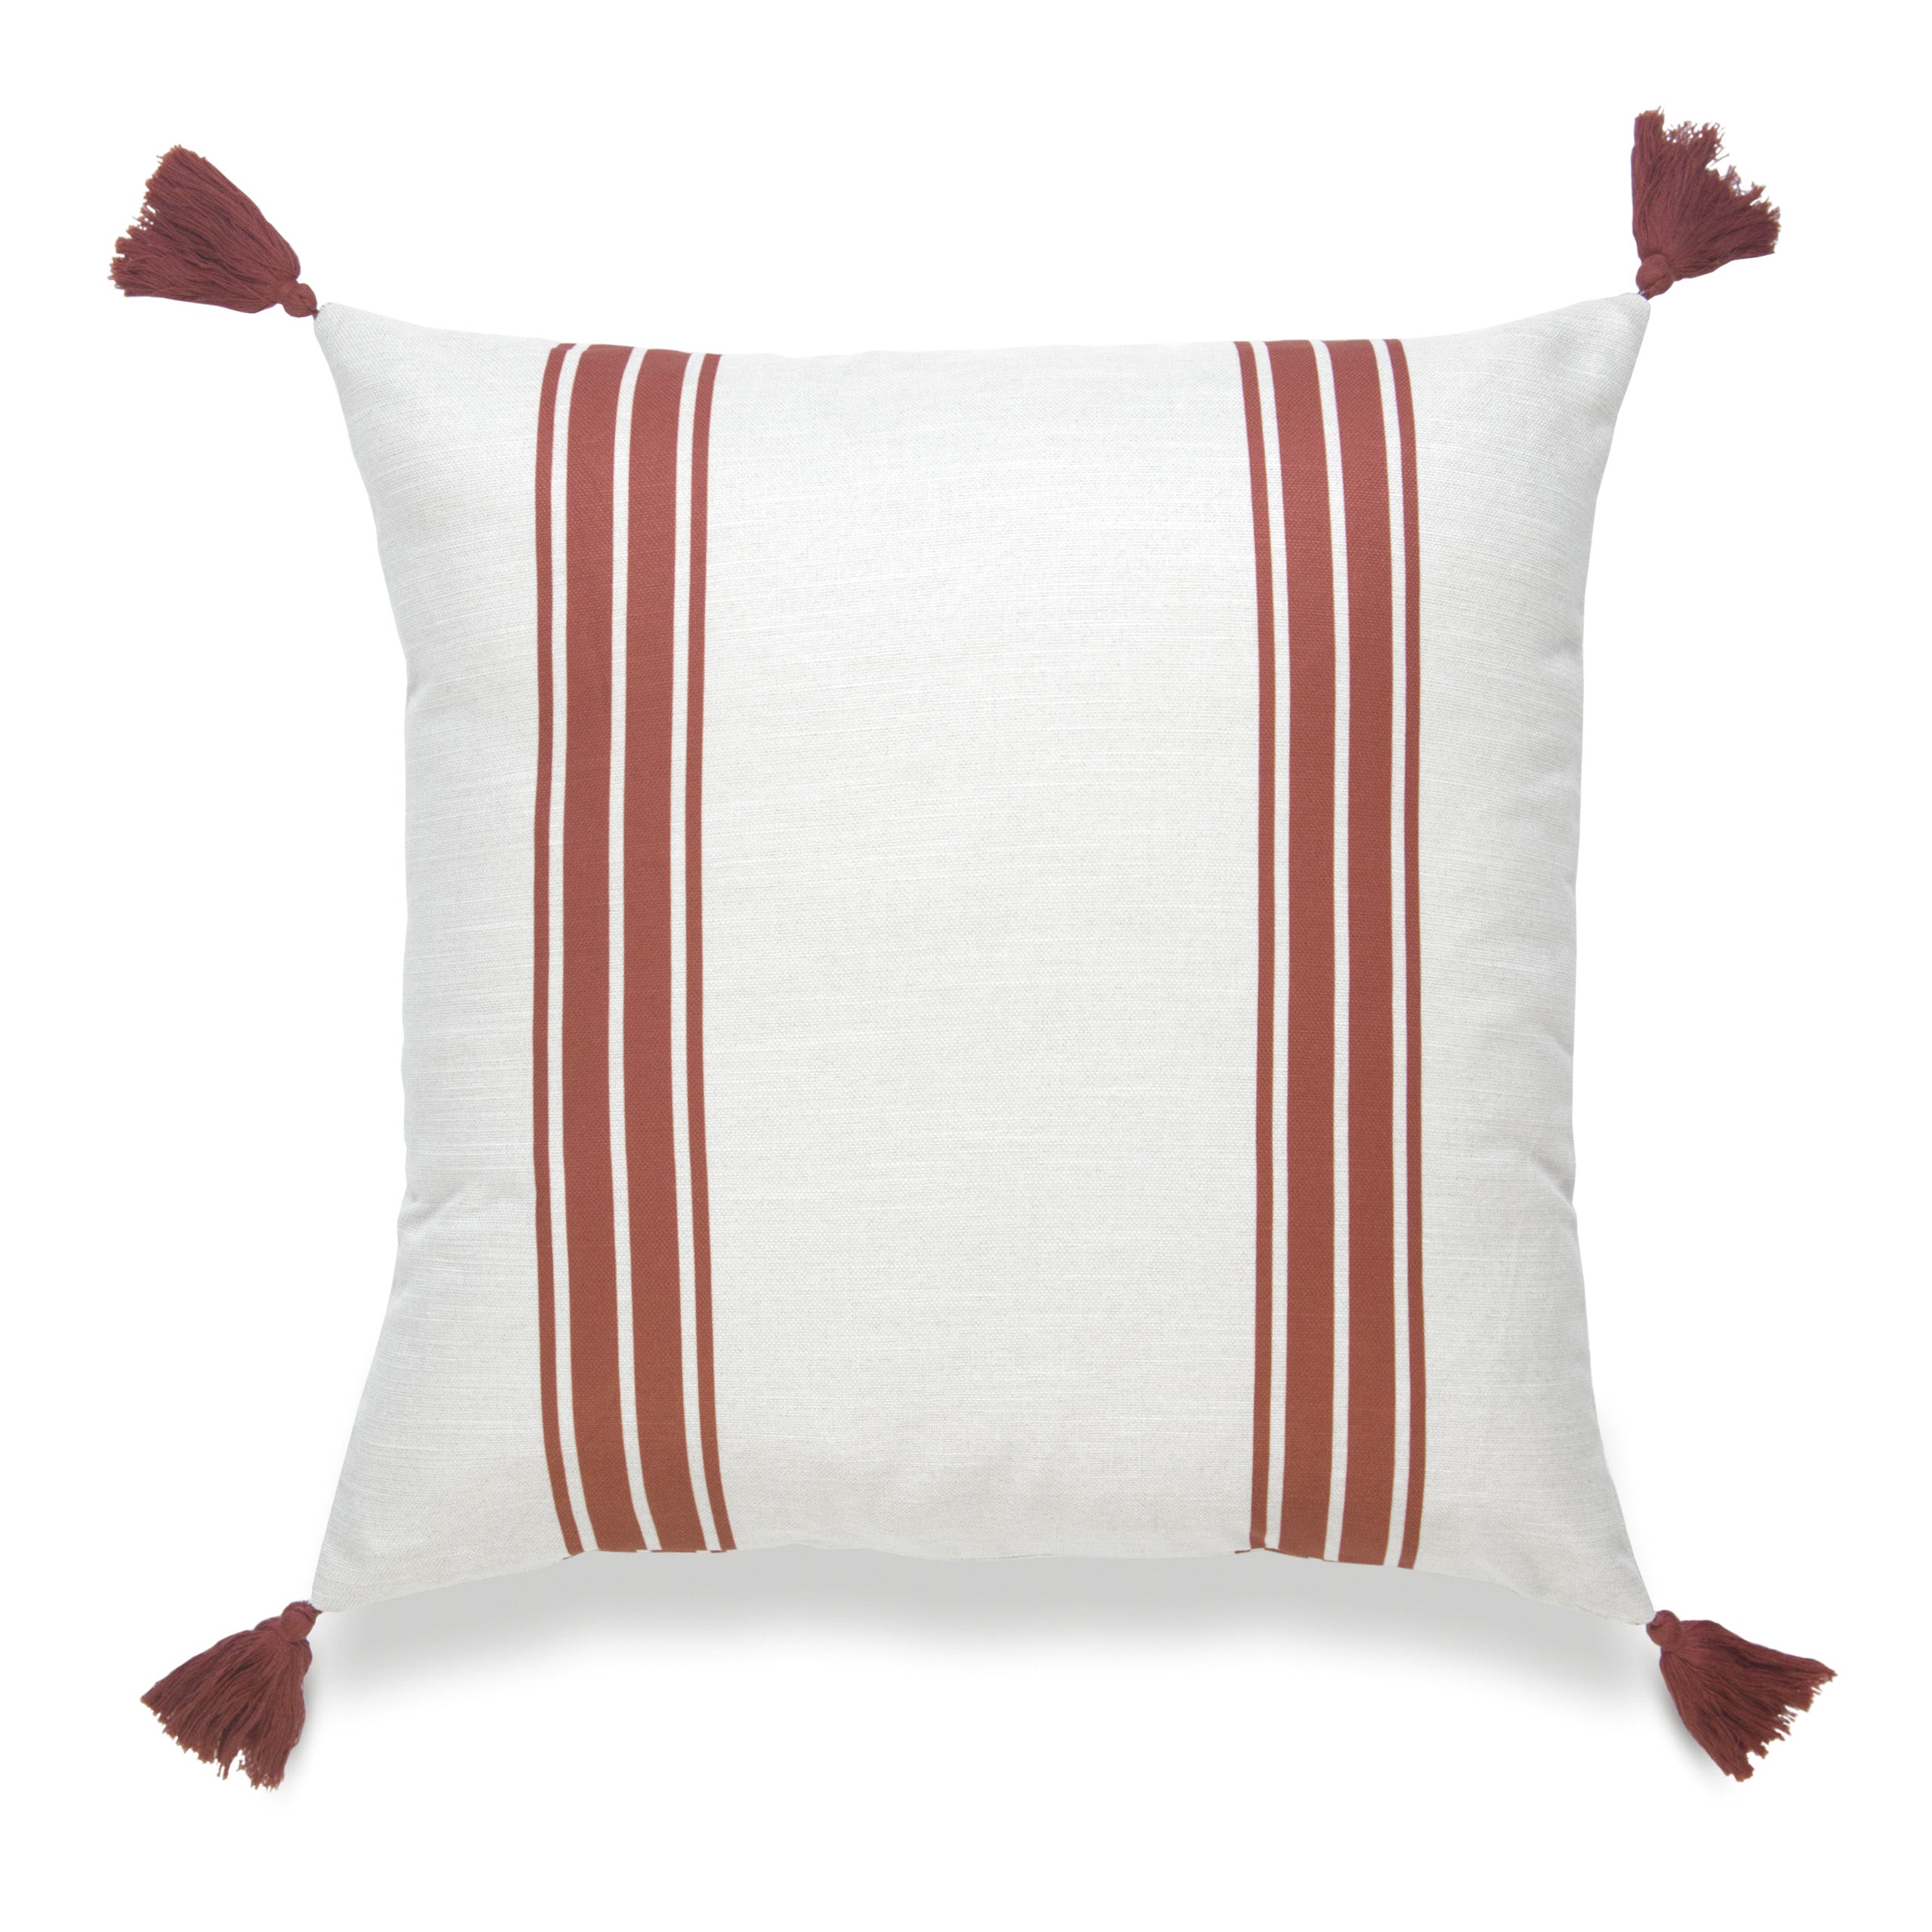 Fall Indoor Outdoor Pillow Cover, Aviv, Striped Tassel, Orange, 20"x20"